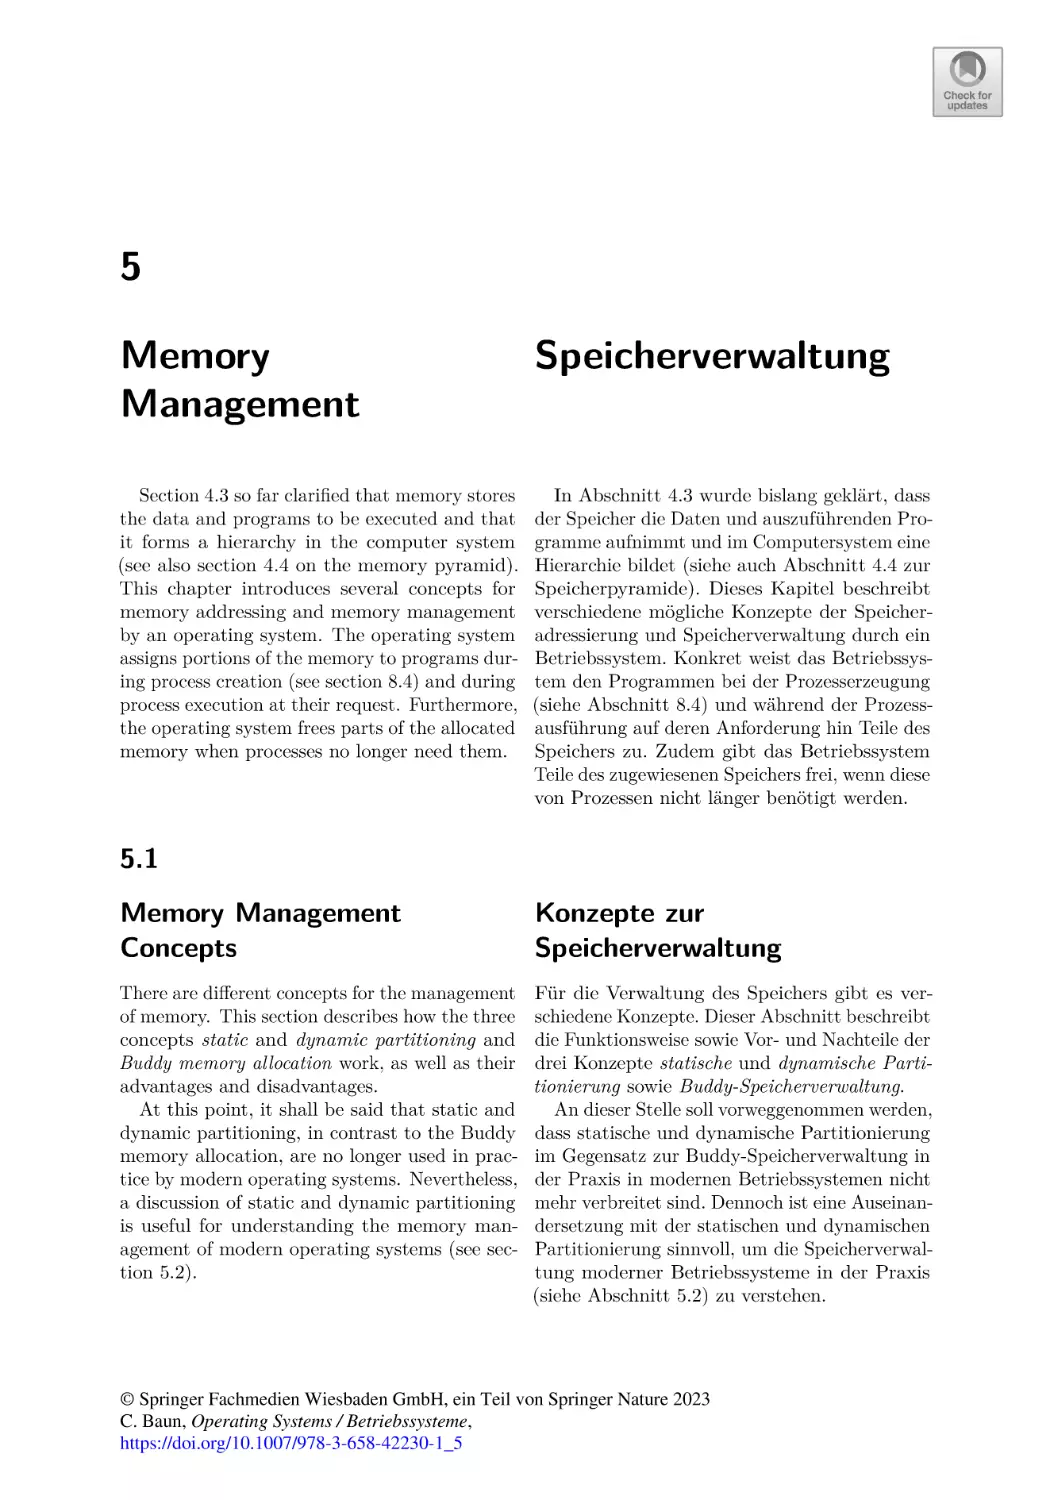 5
Memory Management
5.1
Memory Management Concepts